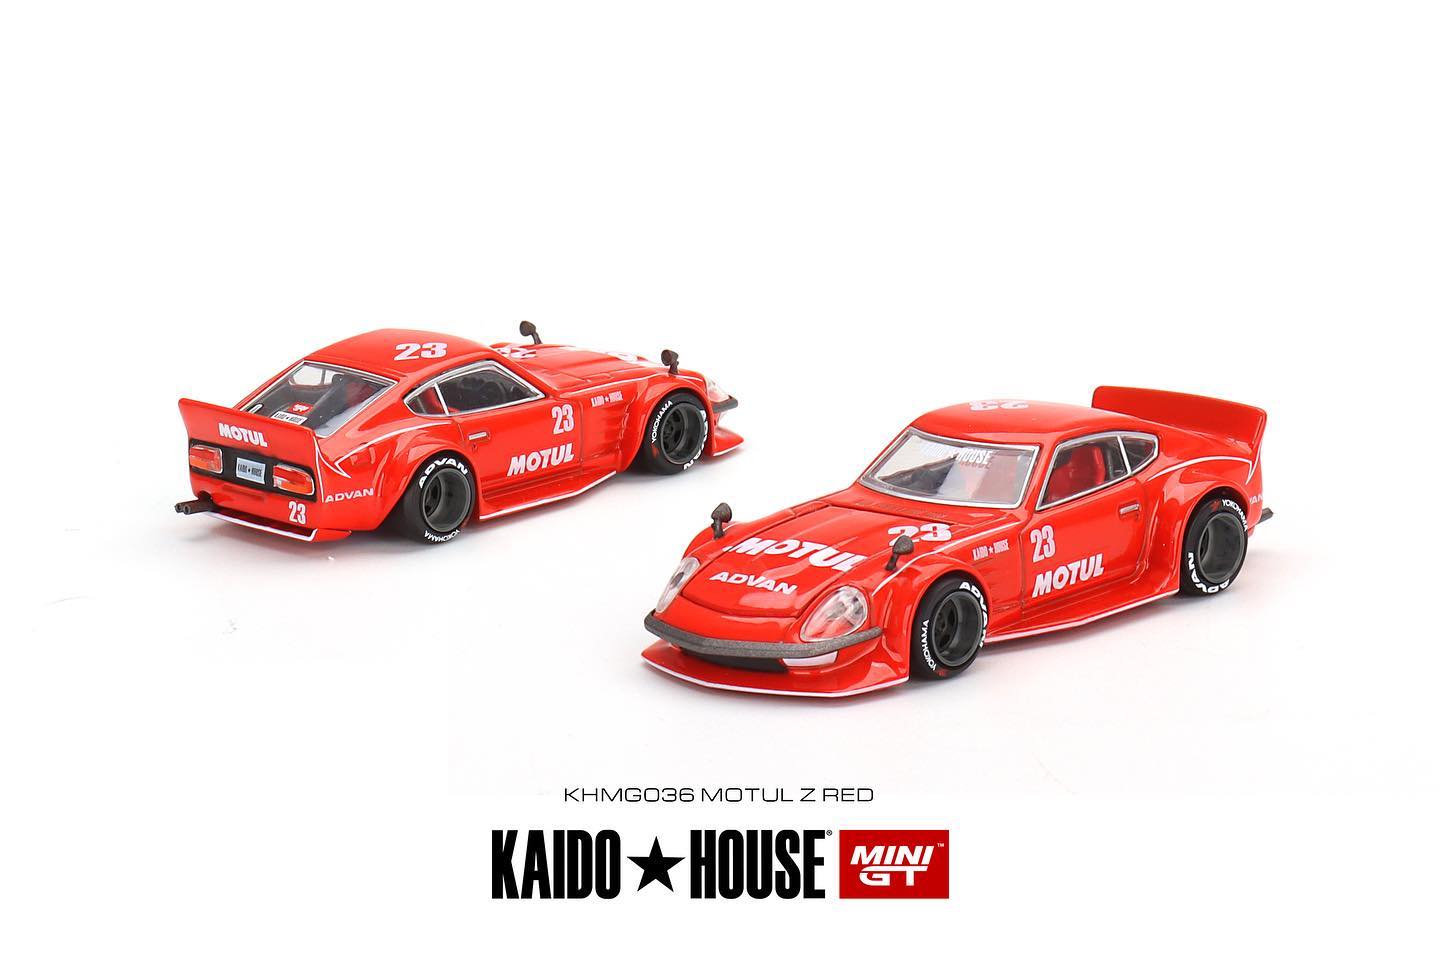 Mini GT x Kaido House Nissan Fairlady Z Motul Z in Red – Rocketbox